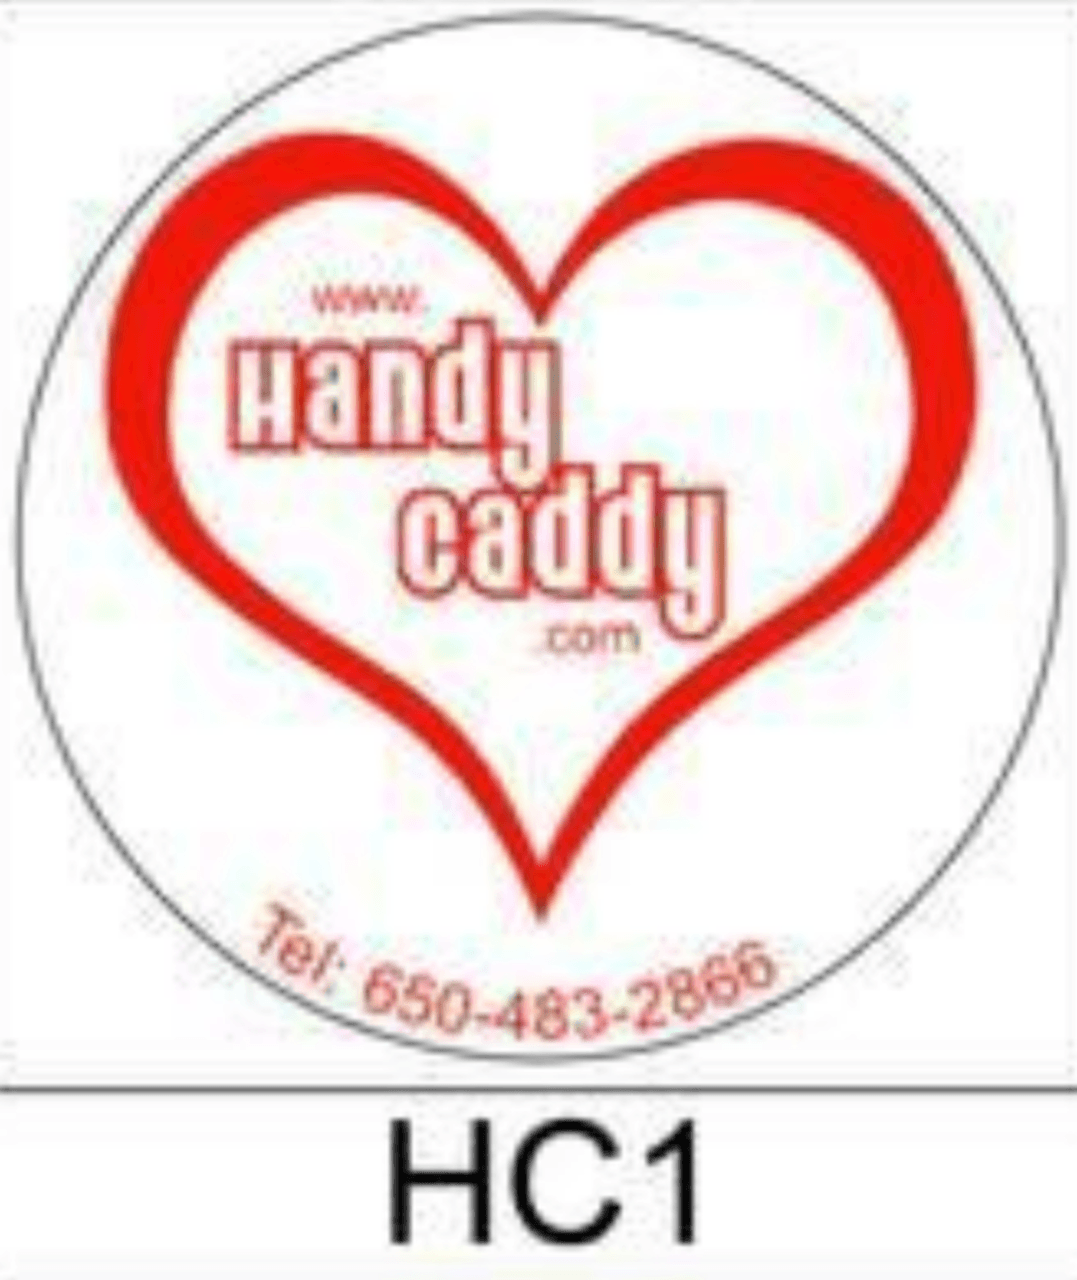 Caddy Logo - Handy Caddy Logo Handy Pop Free with $20 purchase